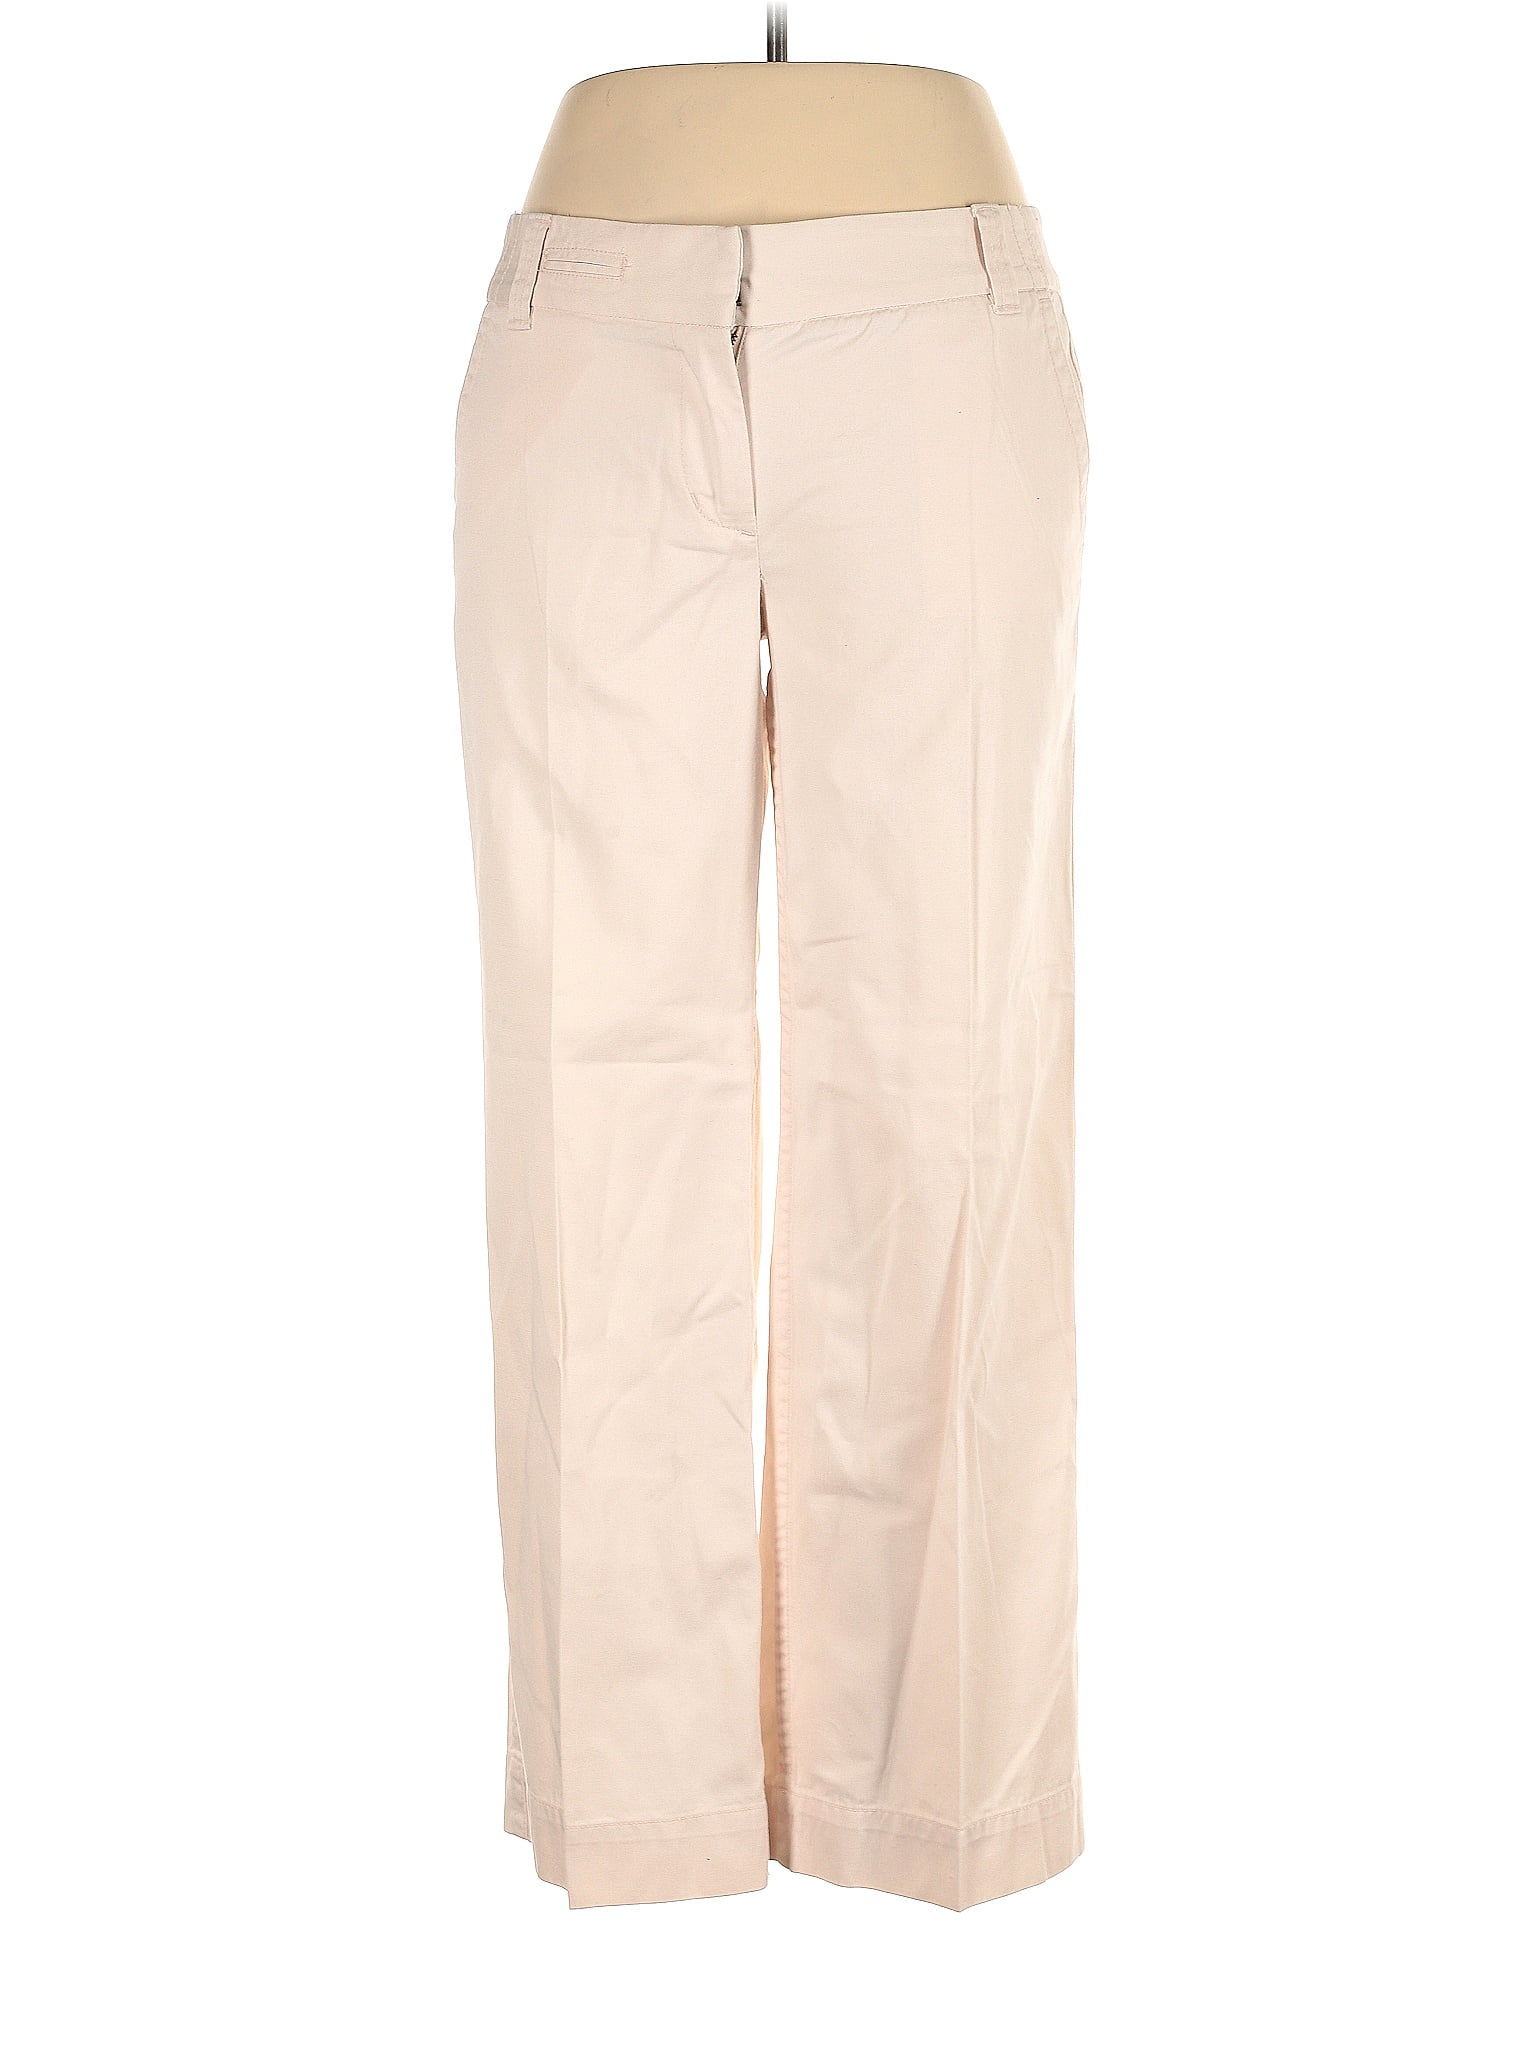 J.Crew 100% Cotton Pink Tan Khakis Size 10 - 77% off | ThredUp